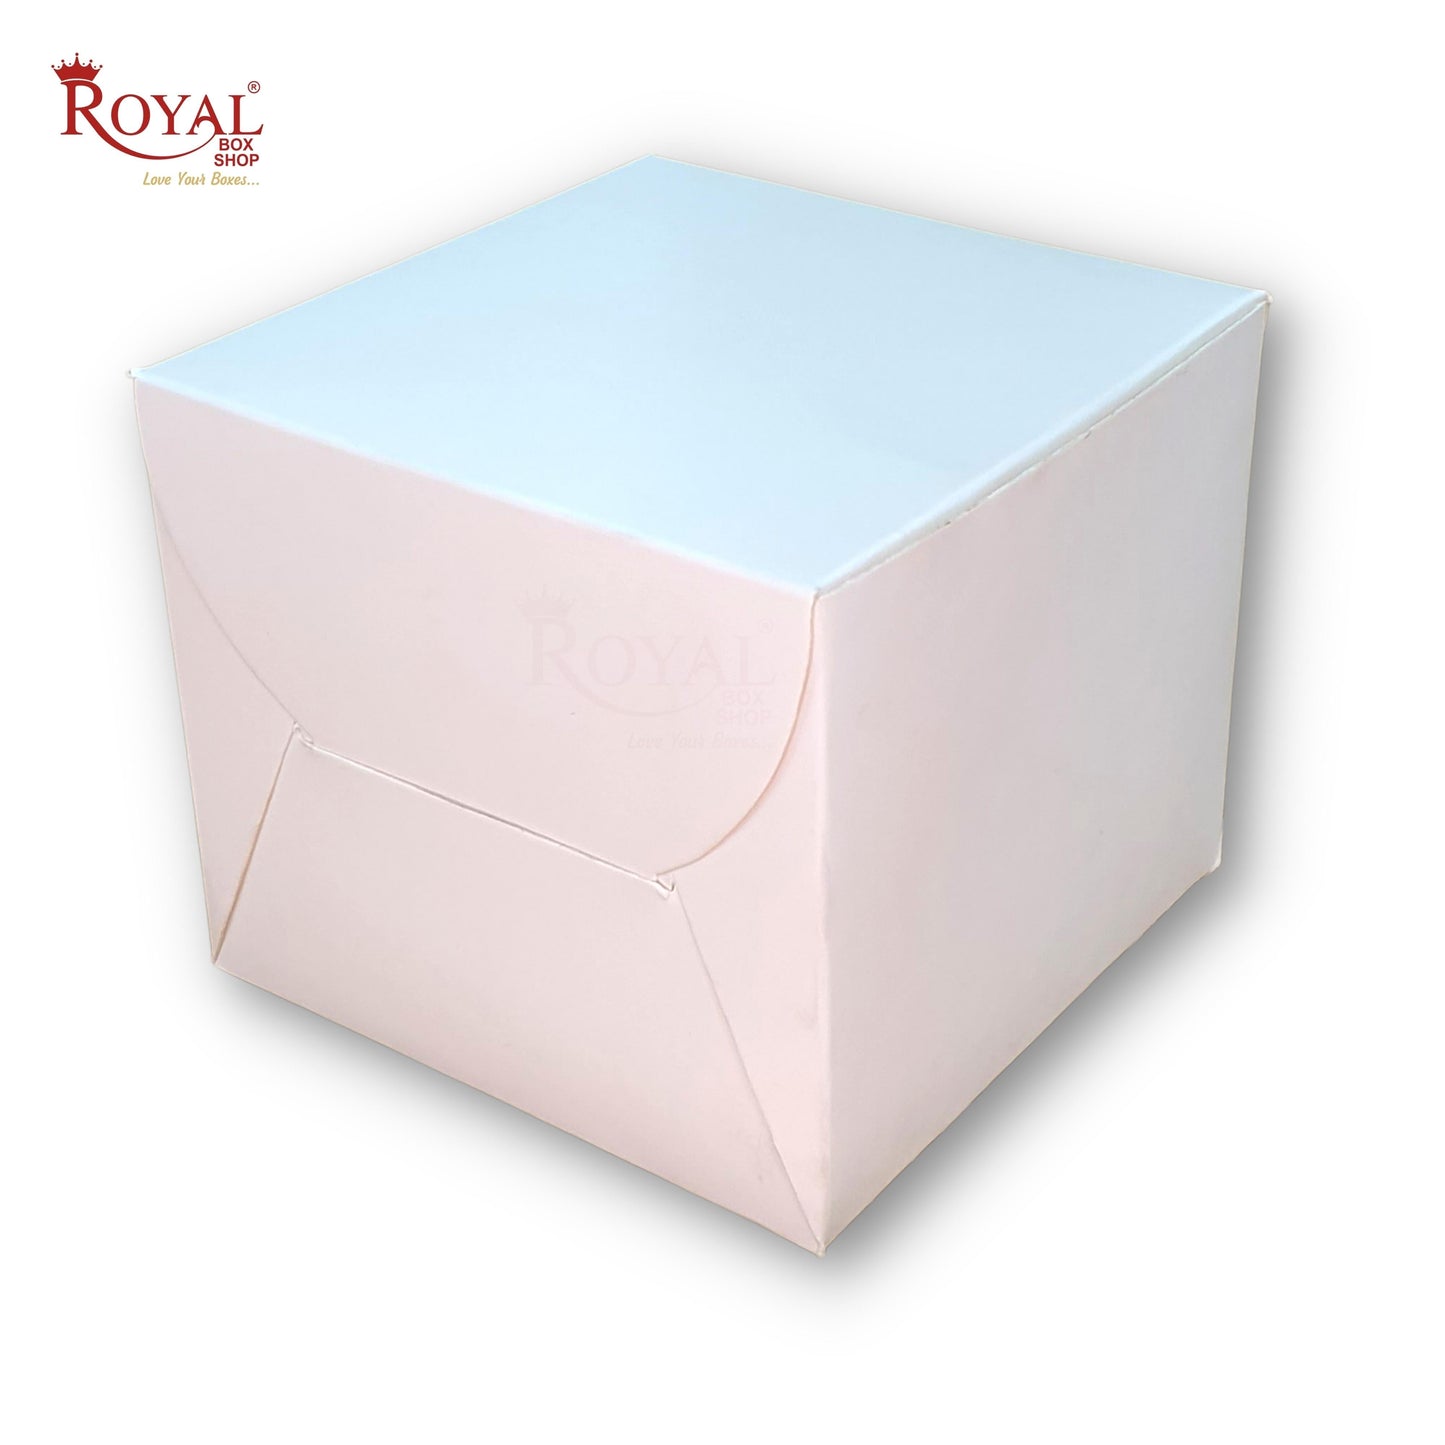 4 Pastry Box I 7x5x3.5 inches I White Color I Mini Cake Boxes I Disposable Cookies Box Royal Box Shop